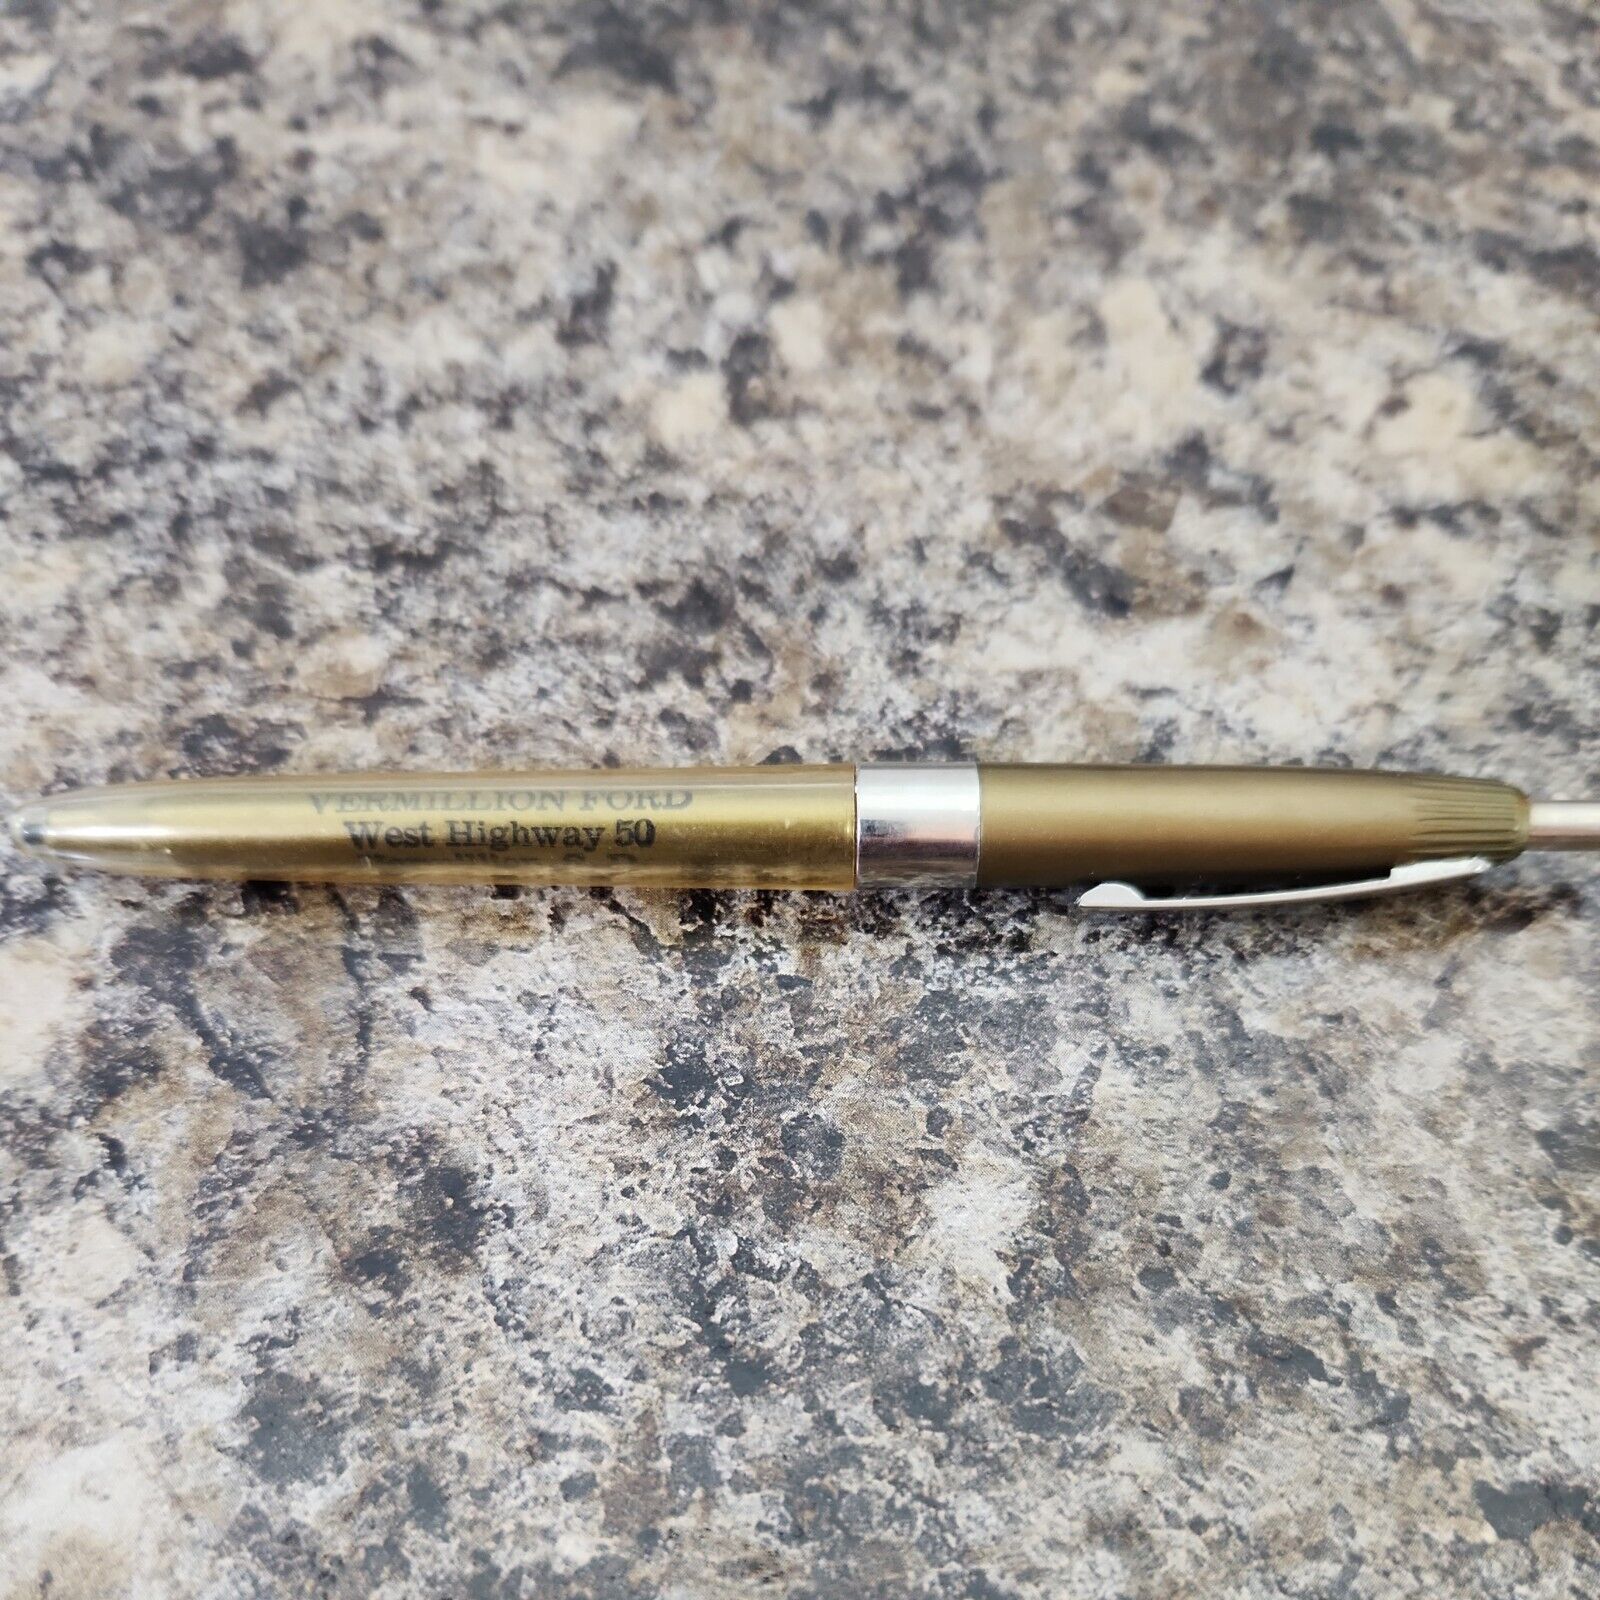 Vintage Vermilion Ford Pen South Dakota